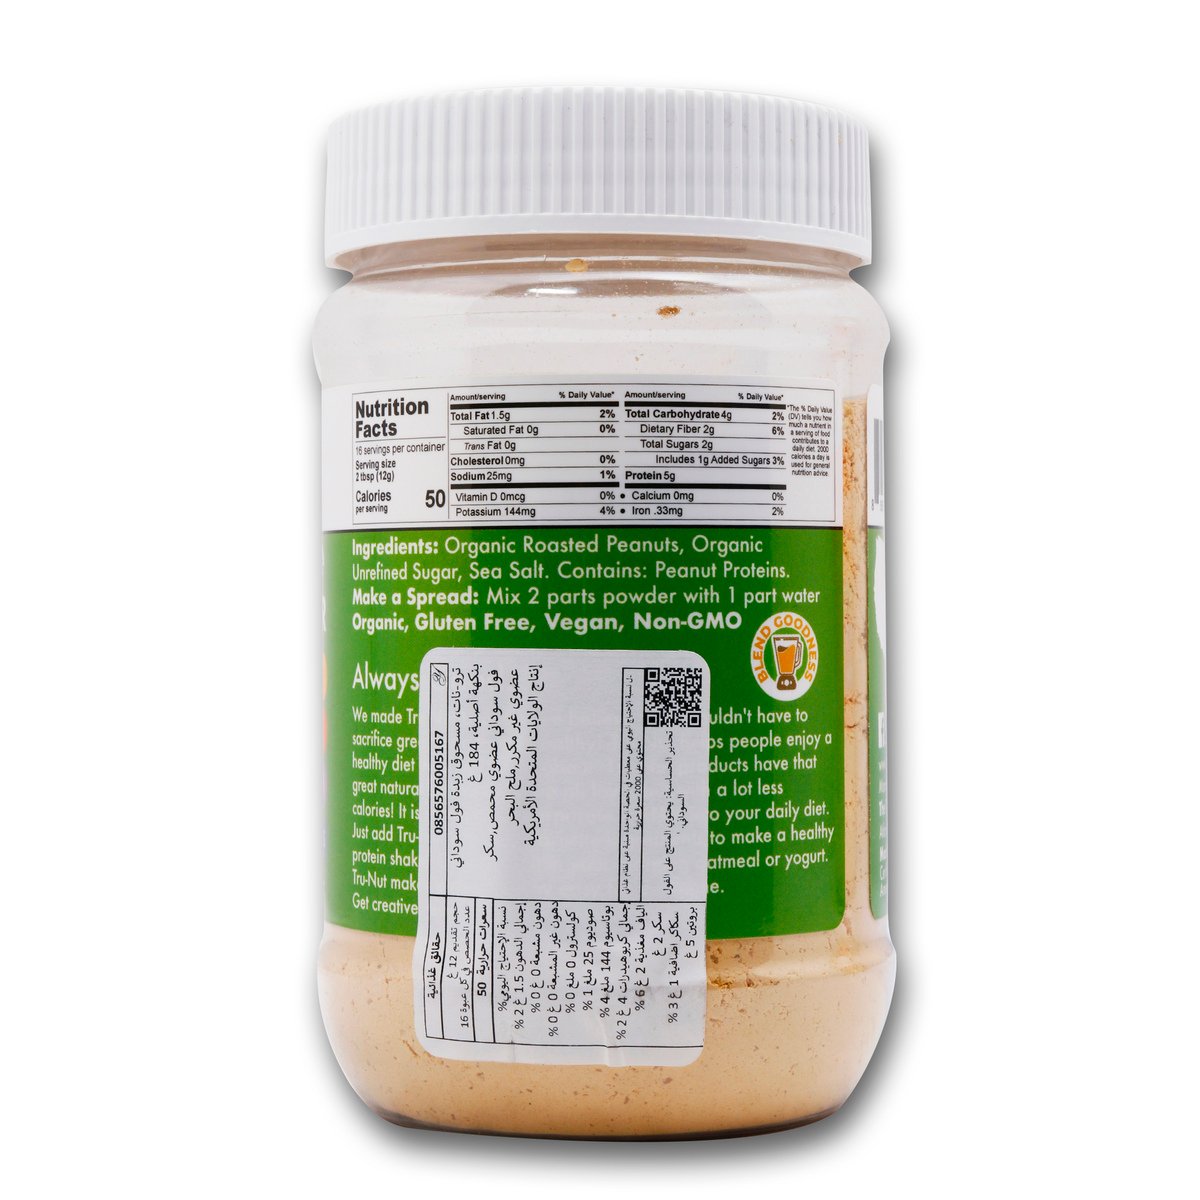 Tru-Nut Organic Powdered Peanut Butter Original Flavor 184g